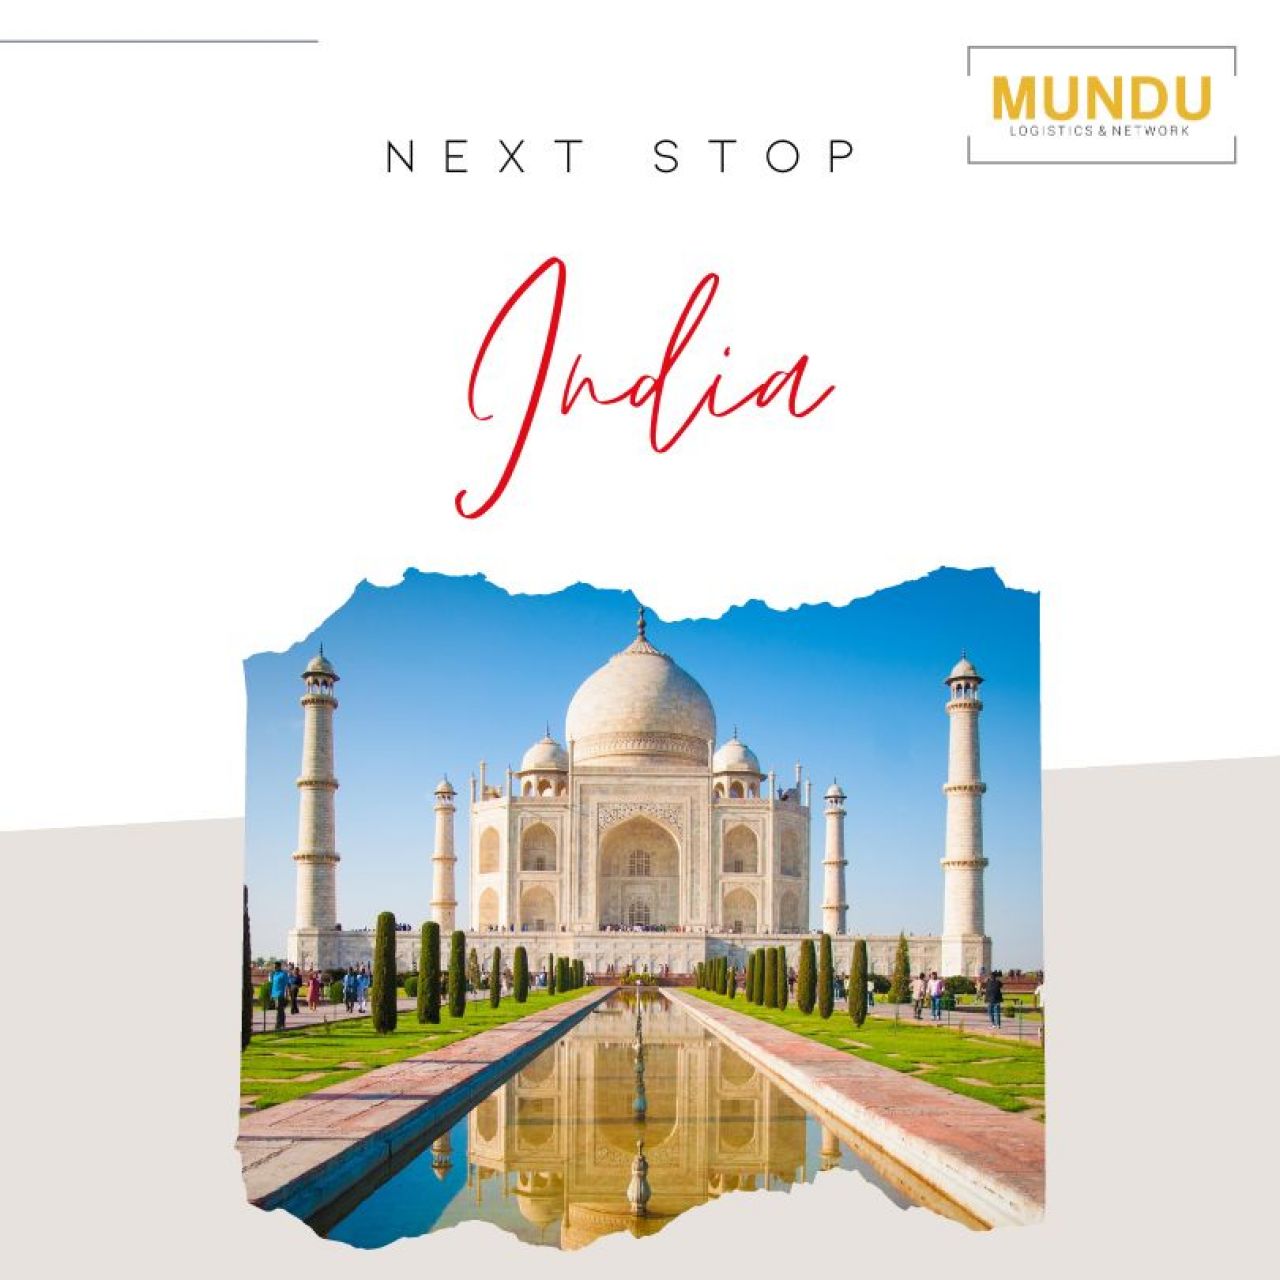 MUNDU is traveling to India